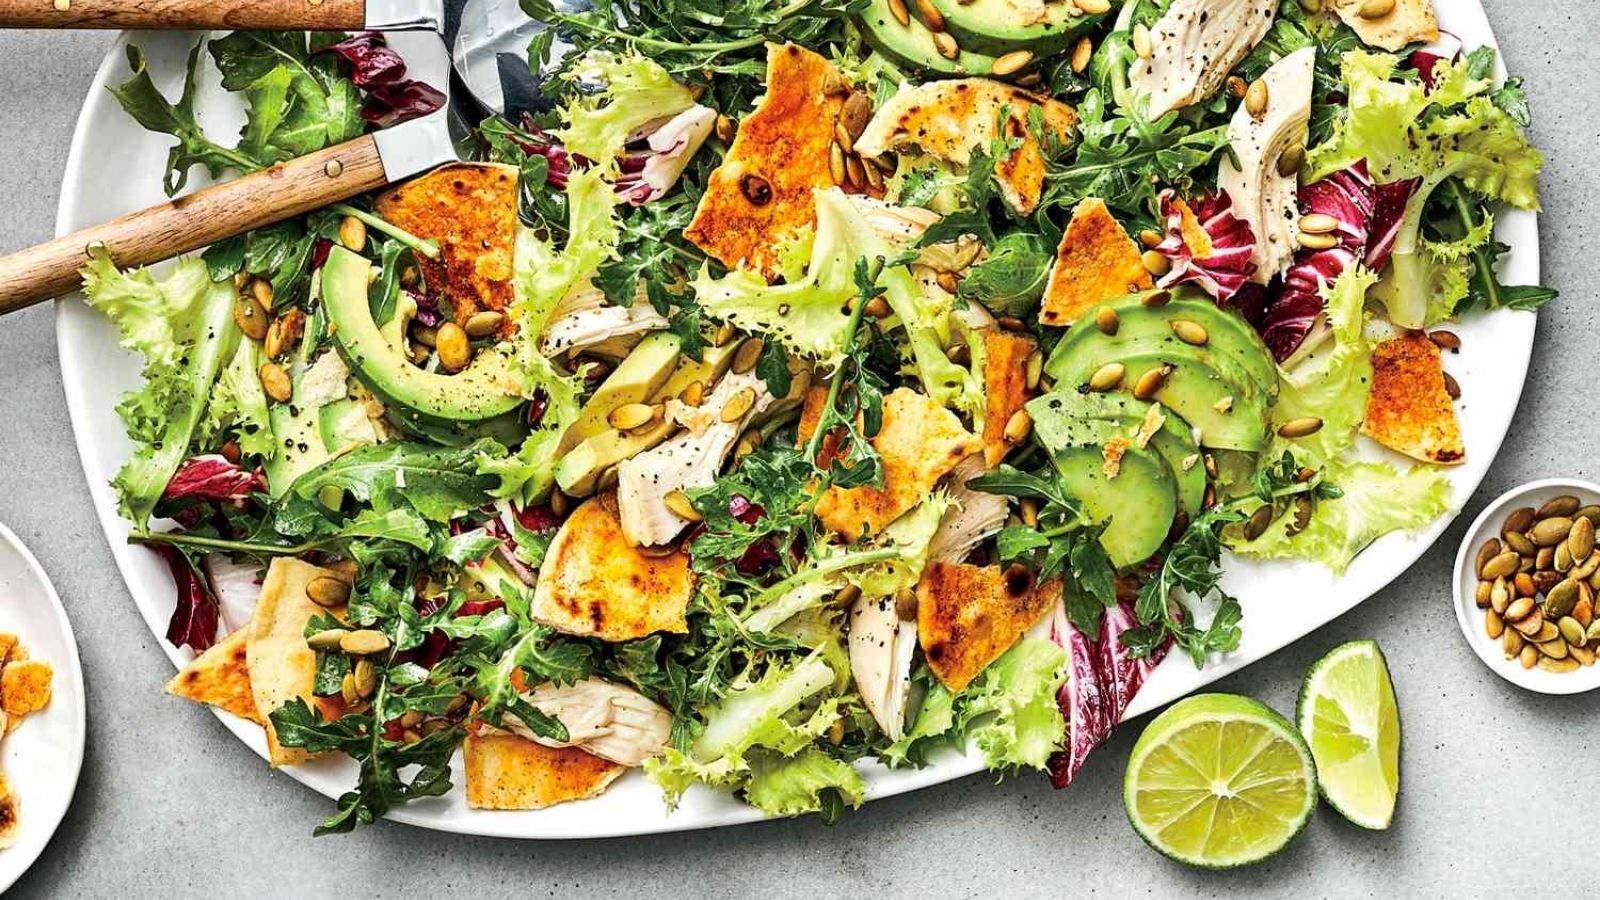 Large Meal Salads